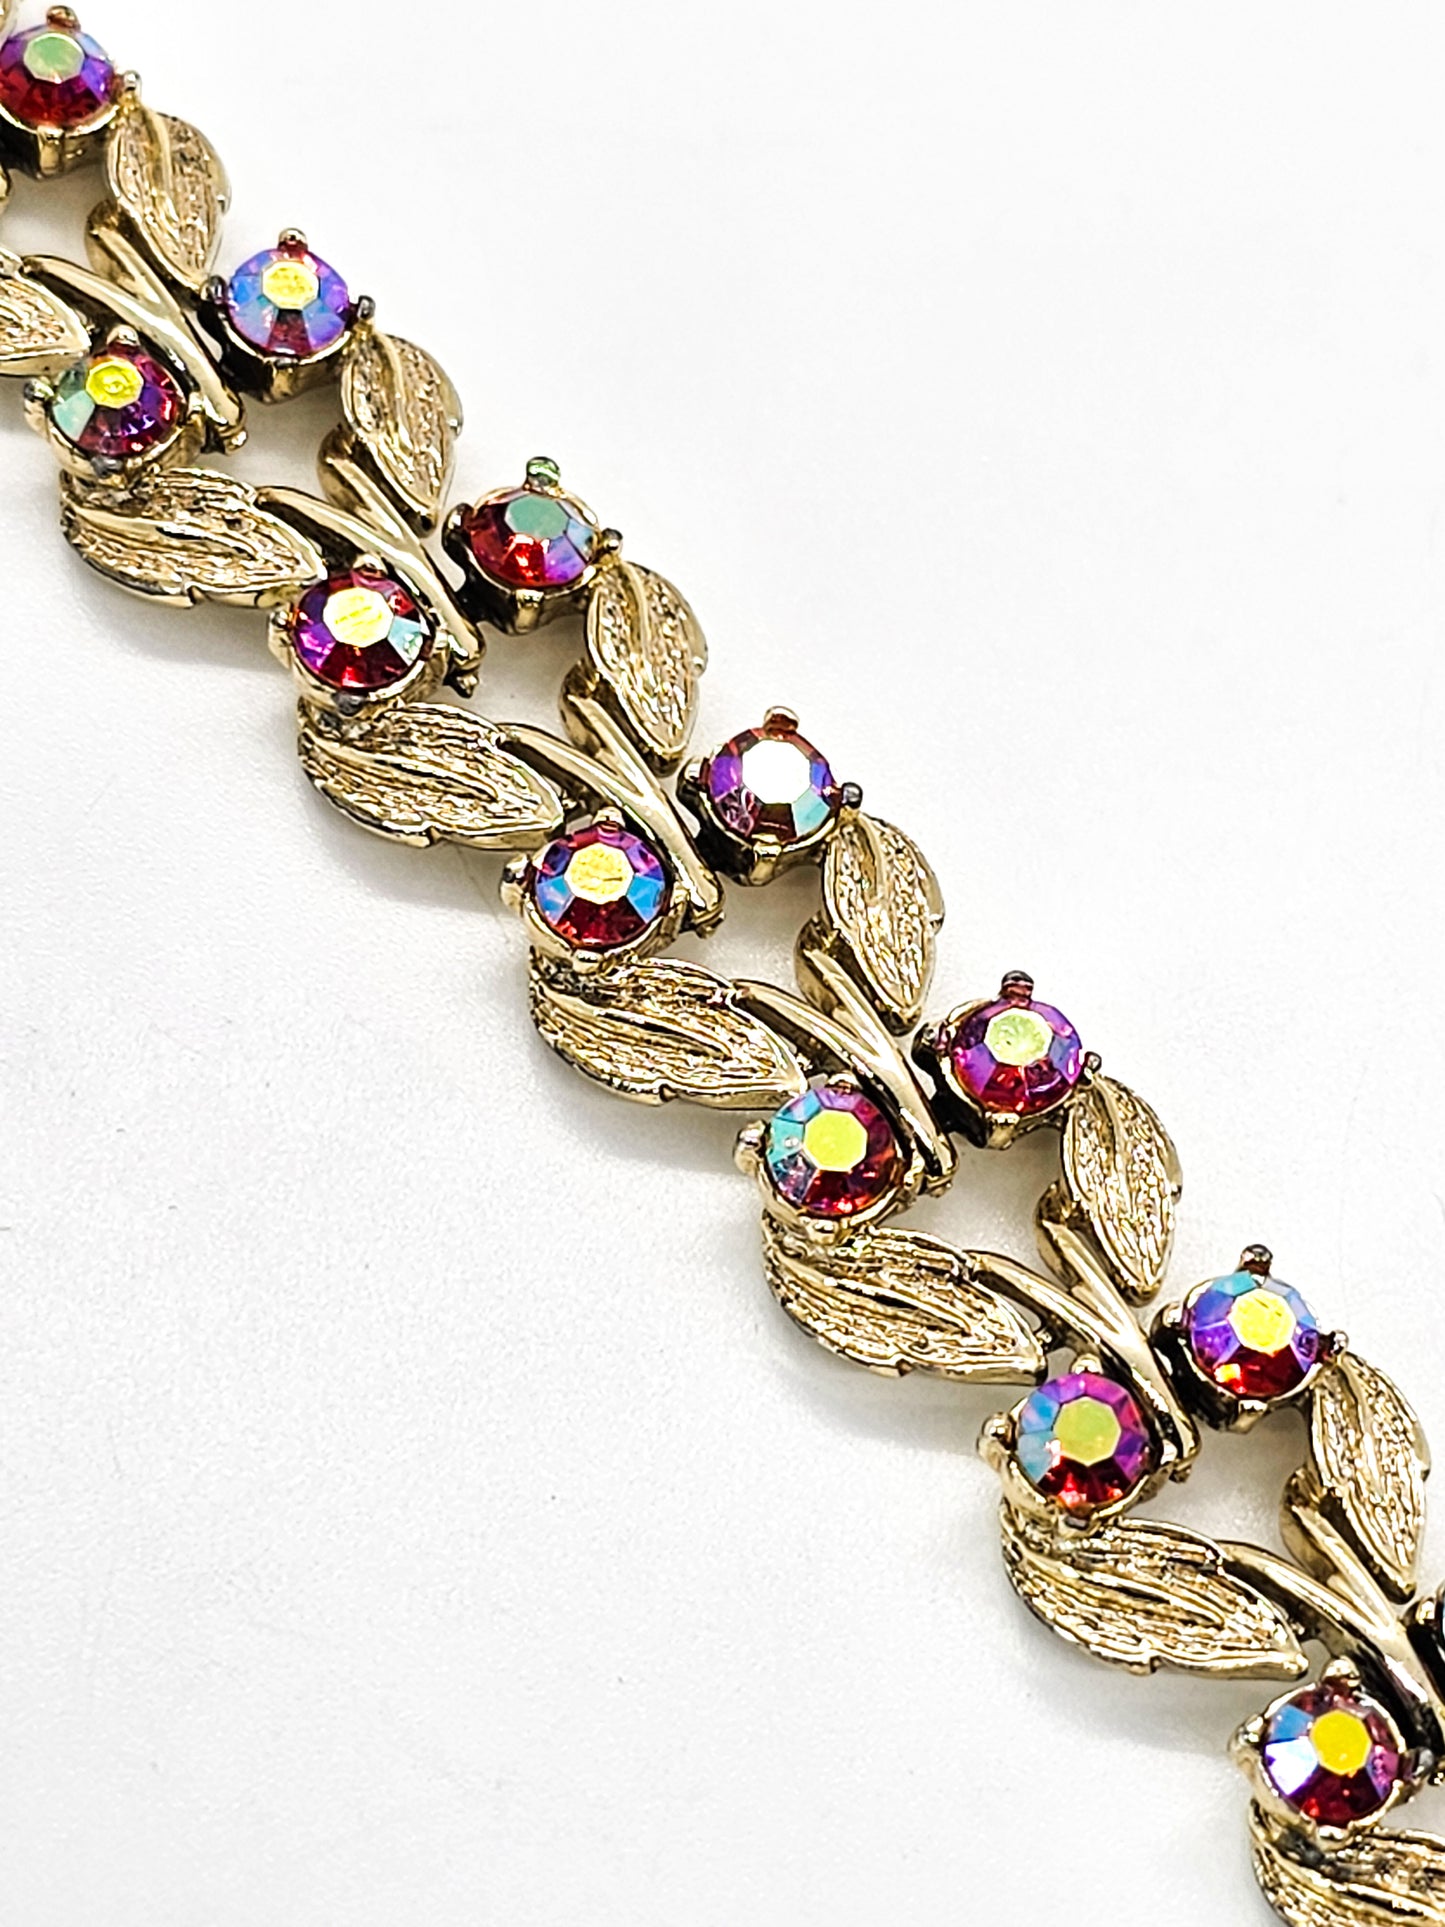 Red and Gold Aurora Borealis gold toned leaf mid century bracelet